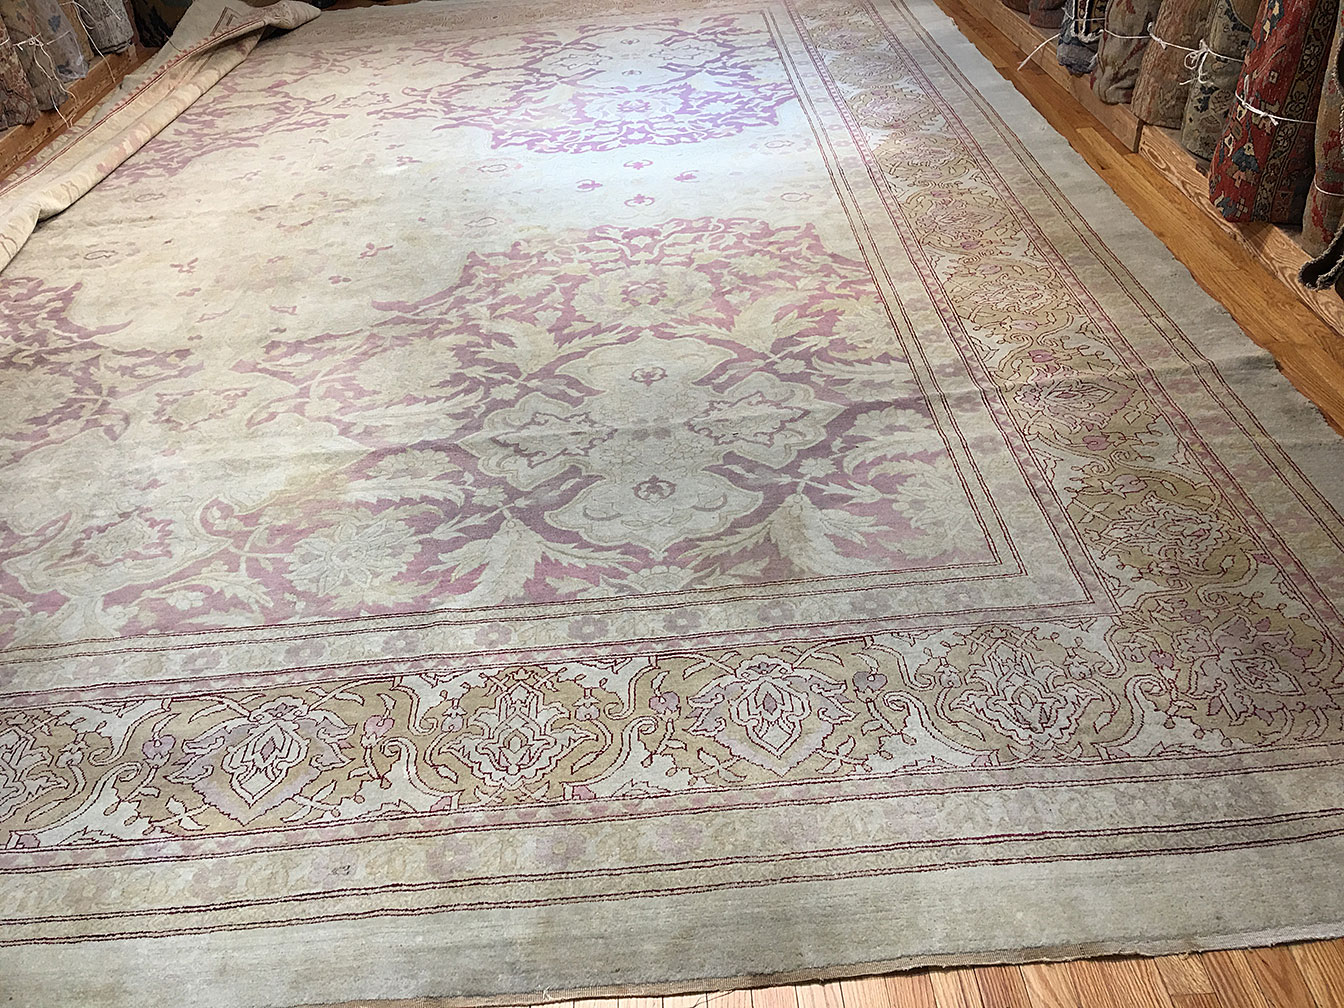 Antique amritsar Carpet - # 53158